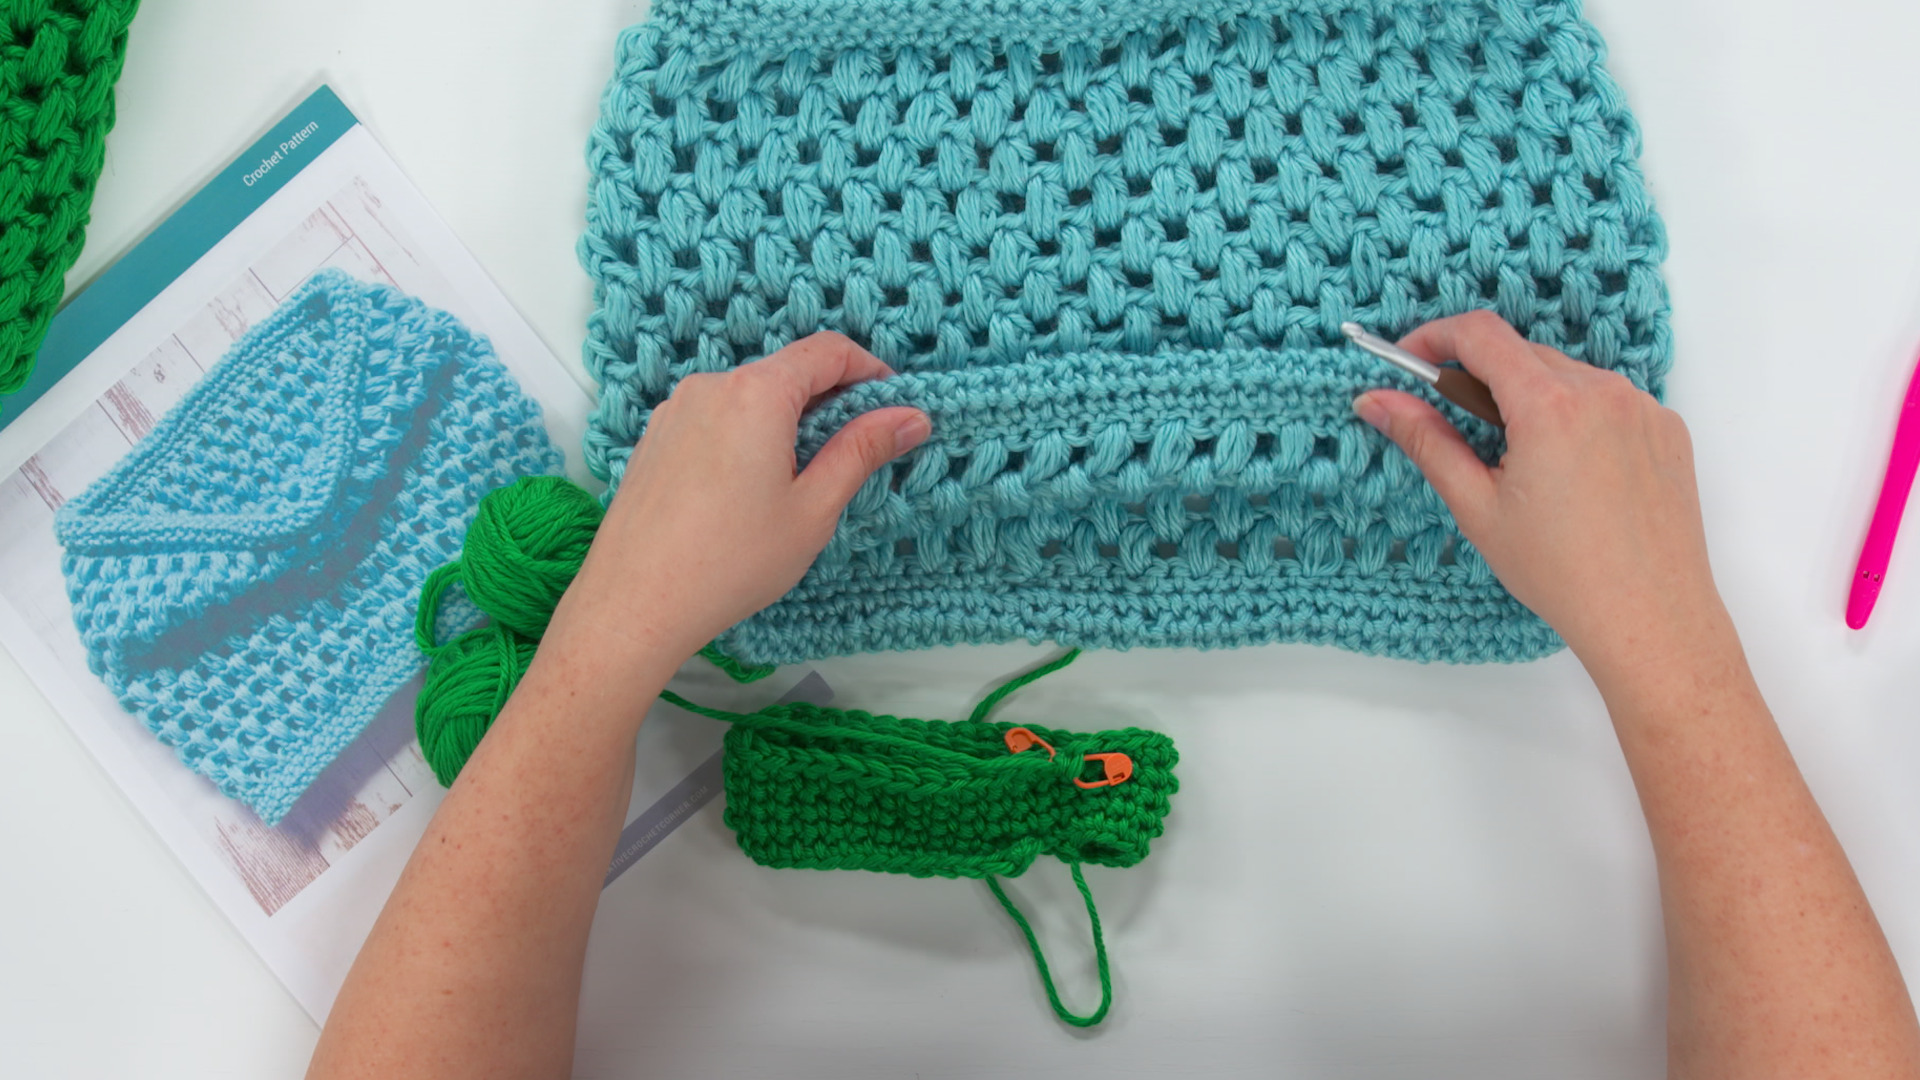 Christmas Present Crochet-Along Project #5 - Bulky Weight